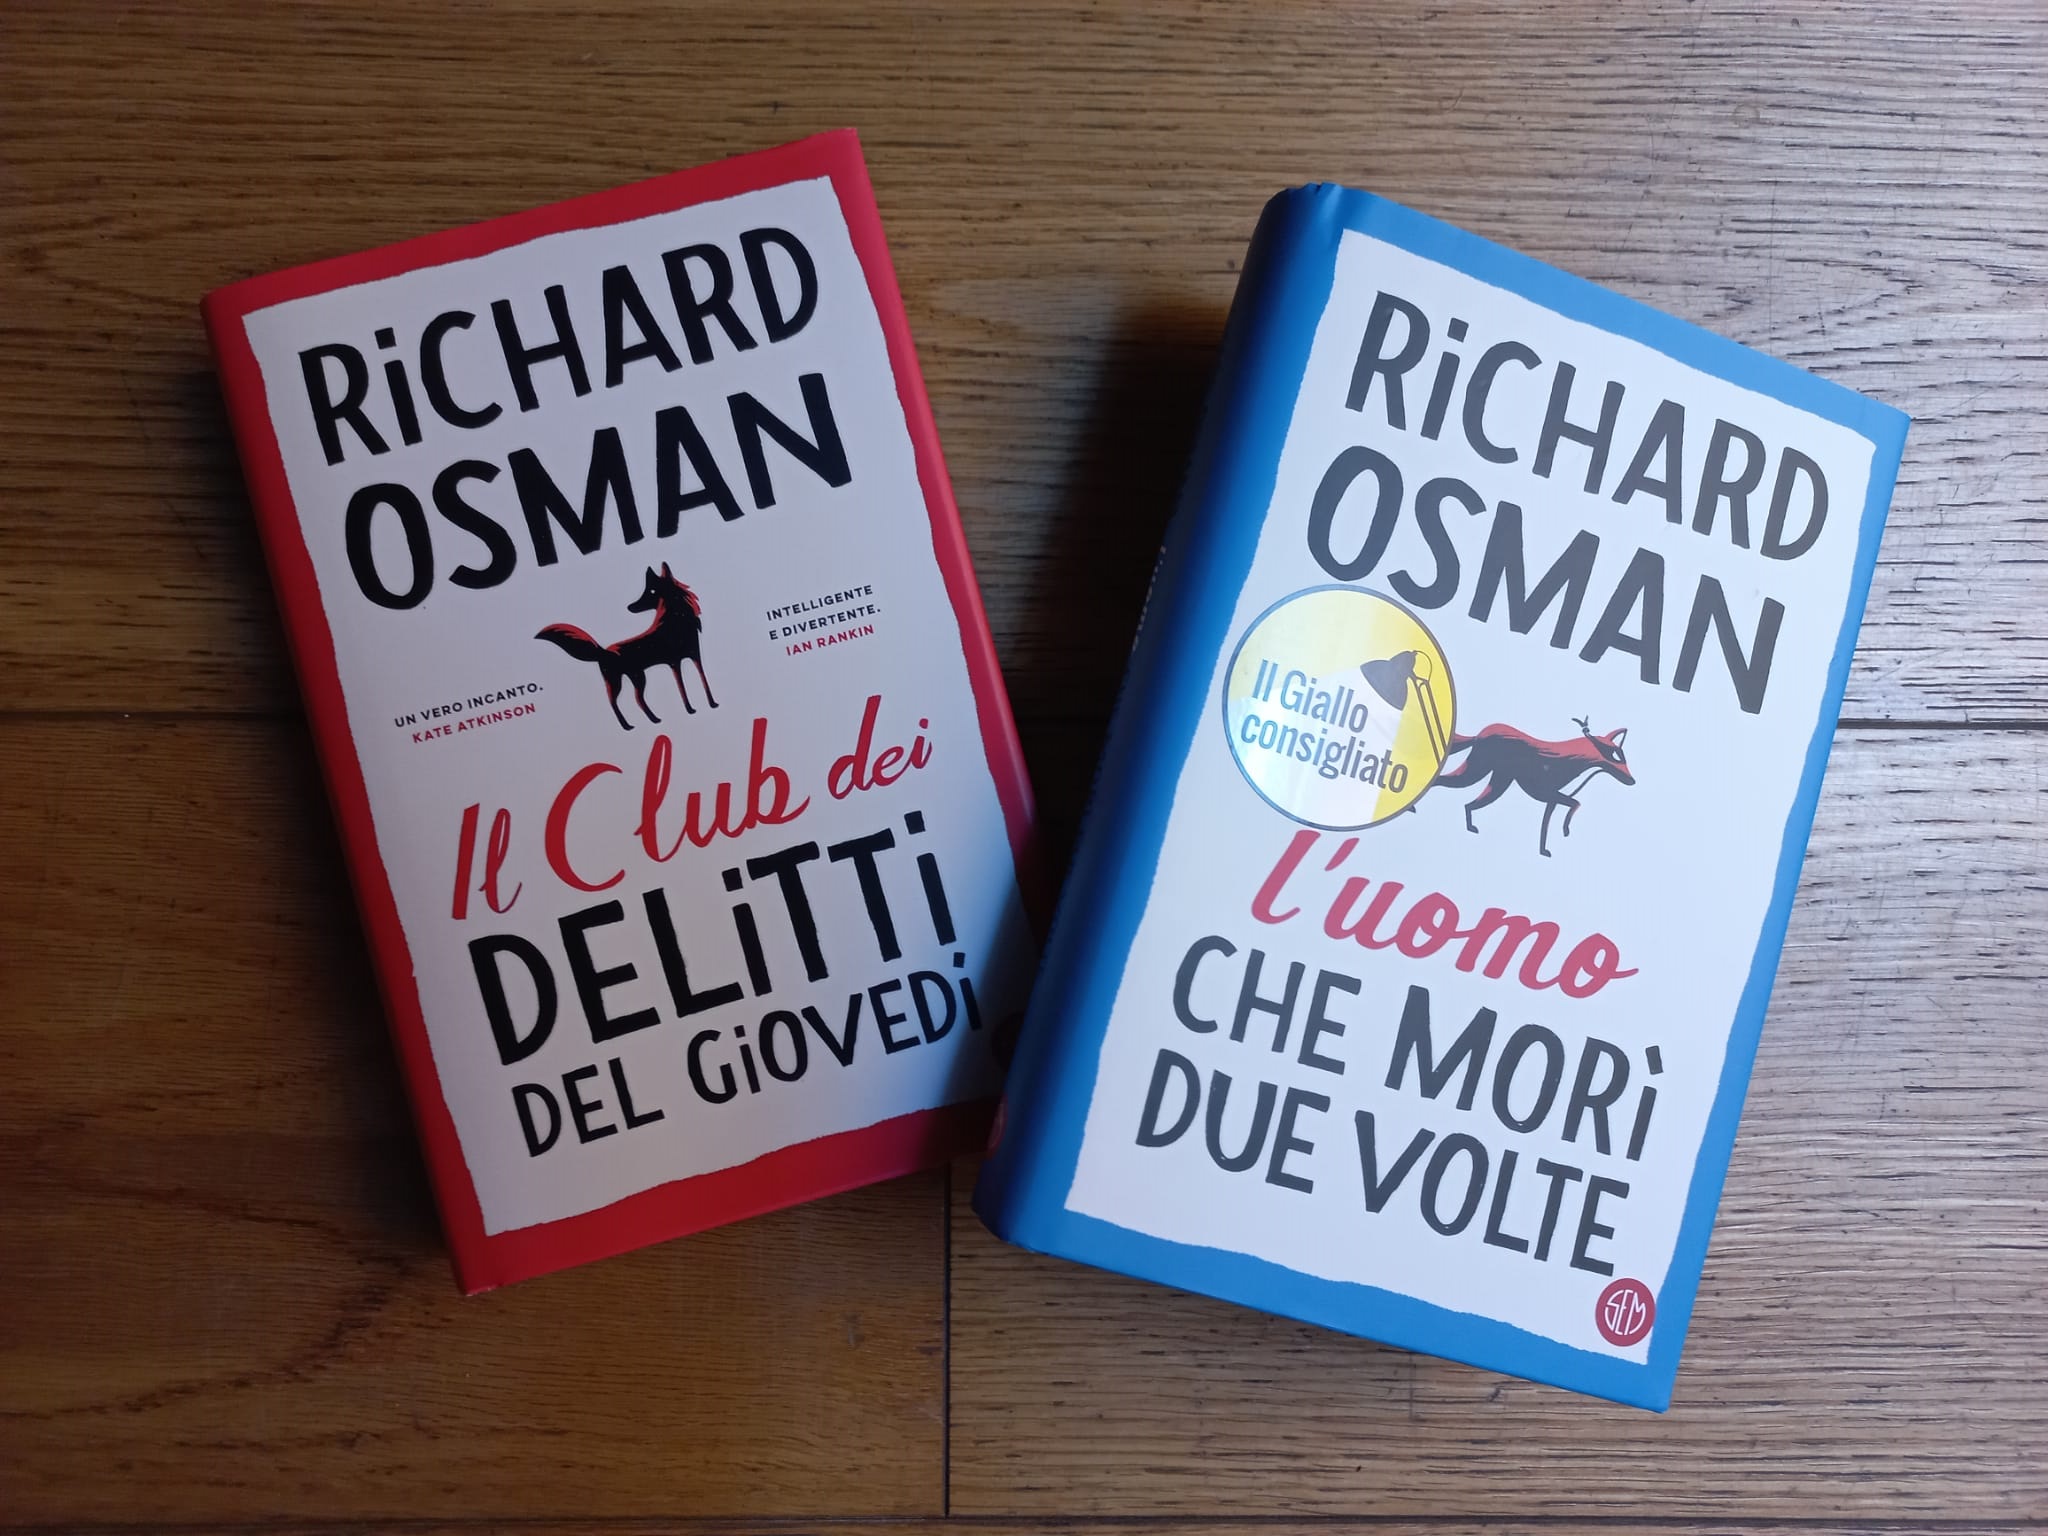 Richard Osman in Italia!